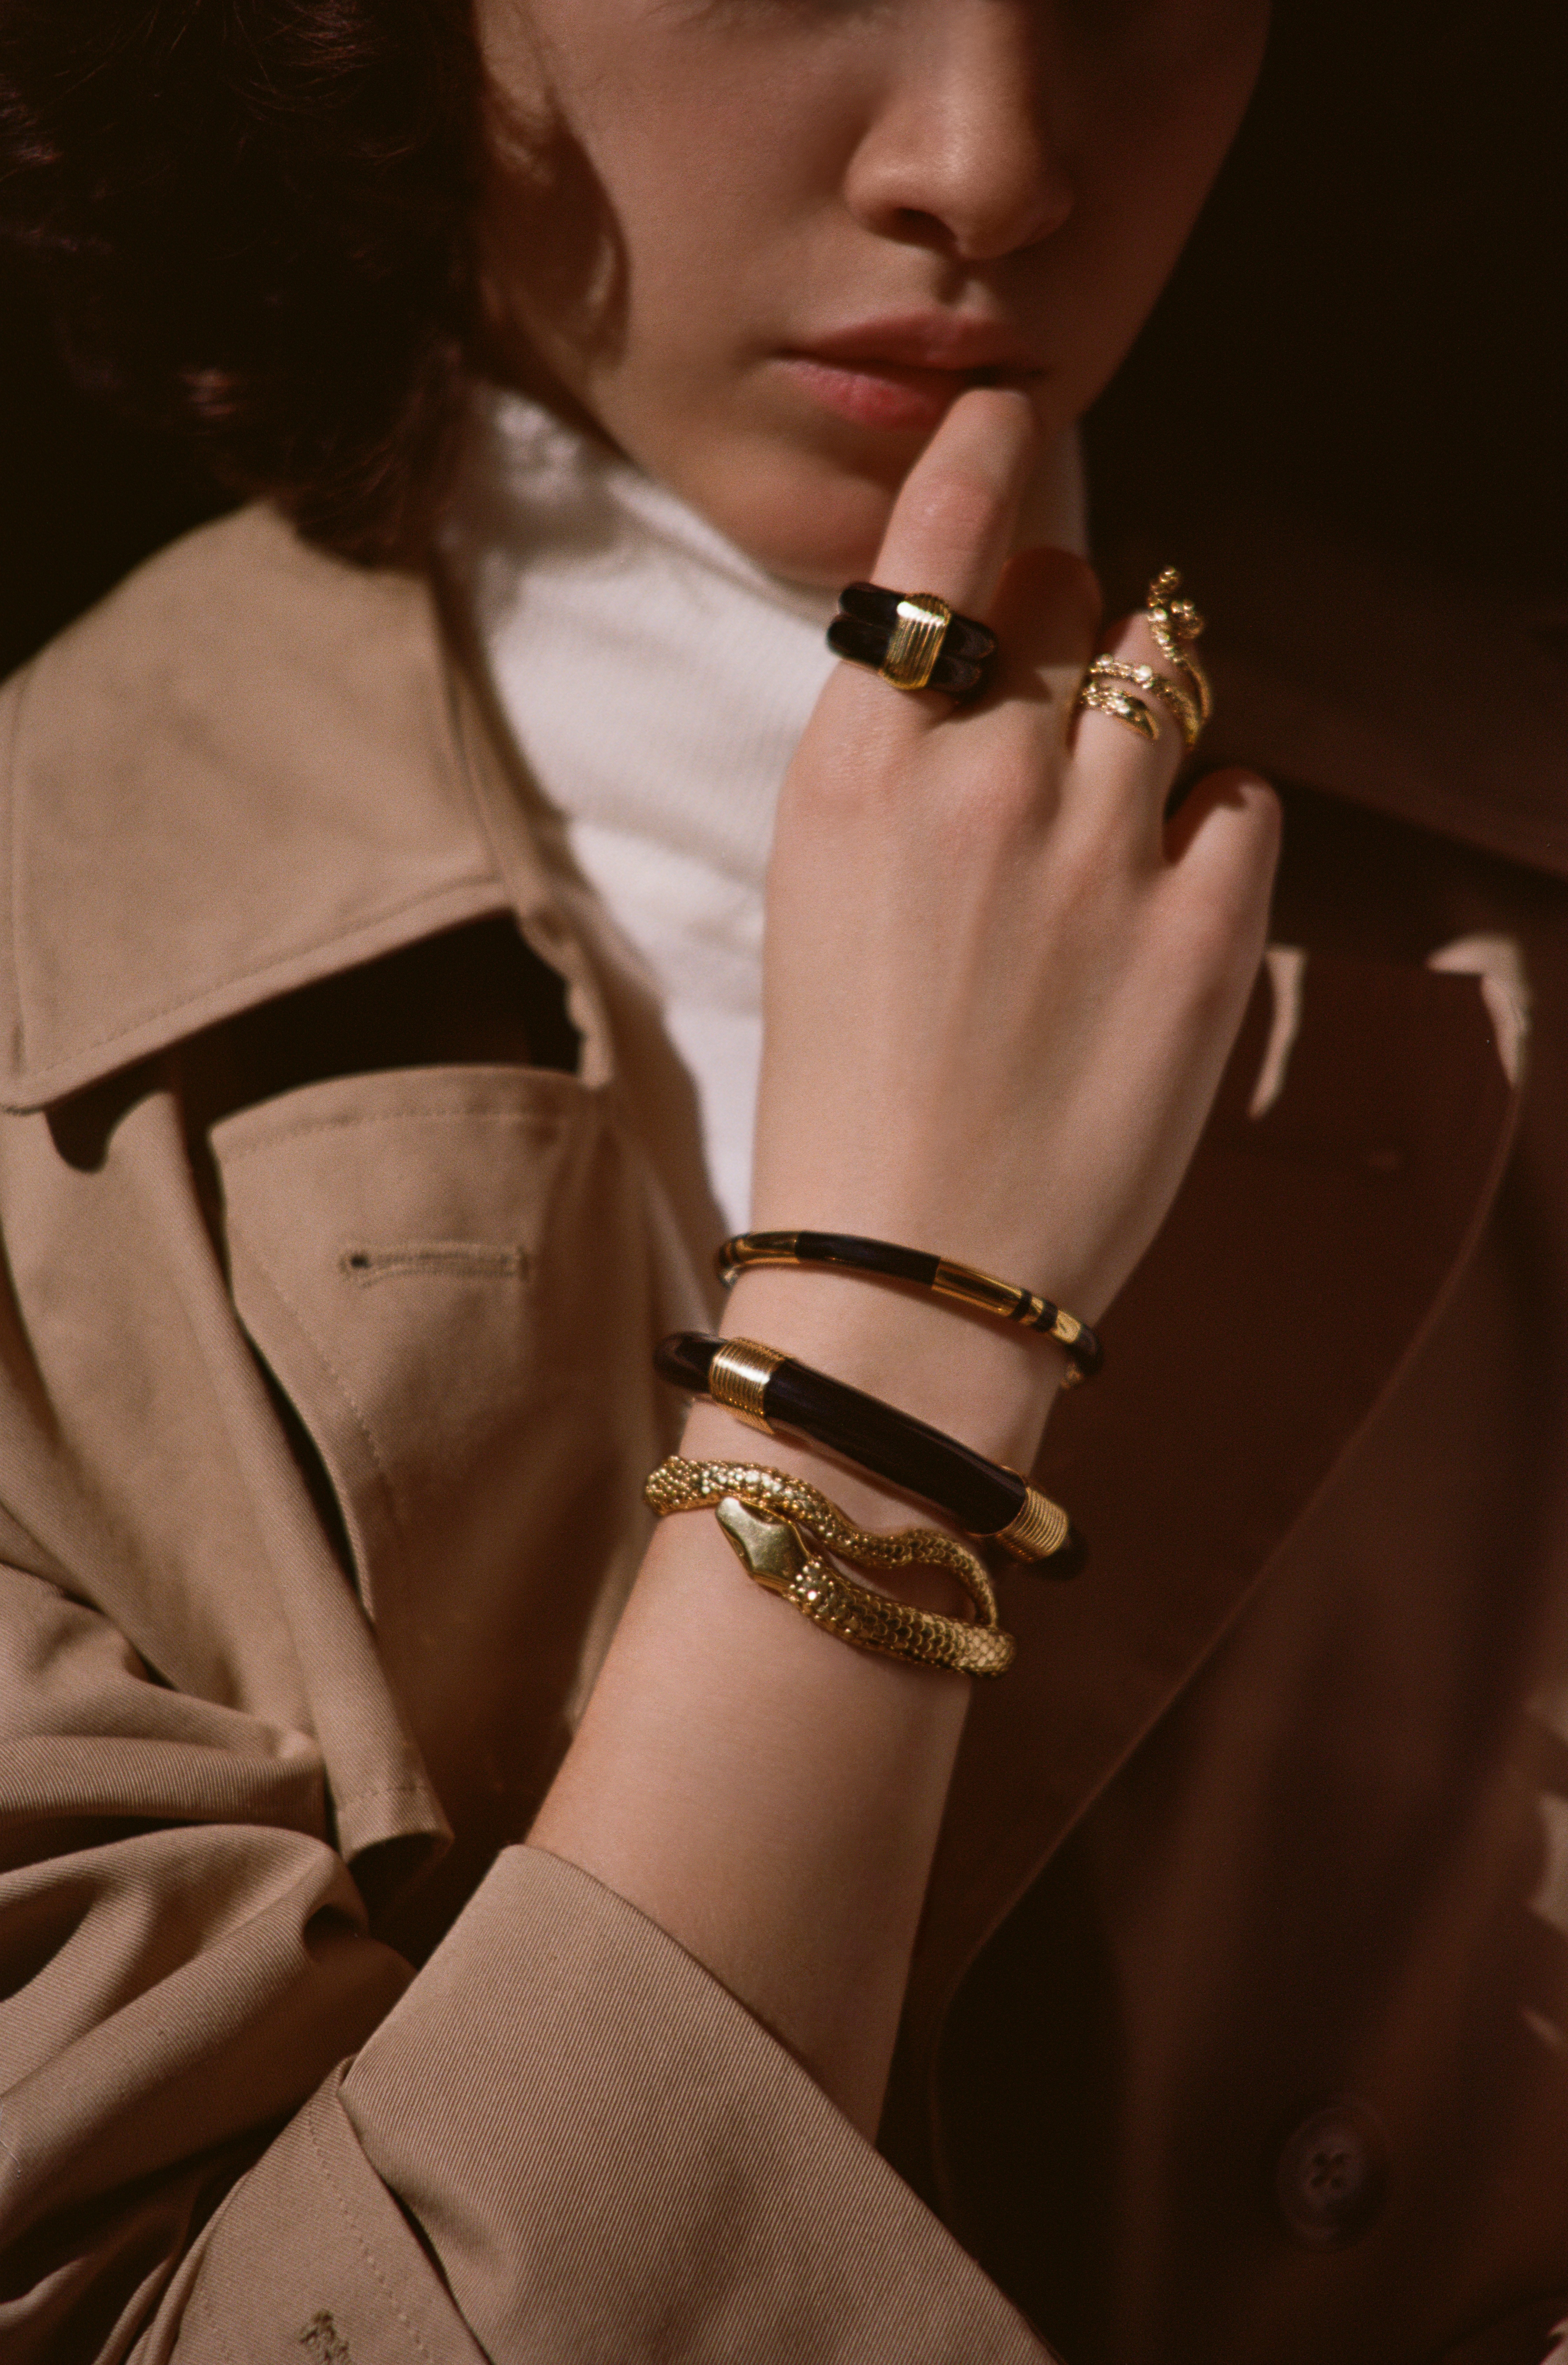 Tao gold plated snake ring - Aurélie Bidermann